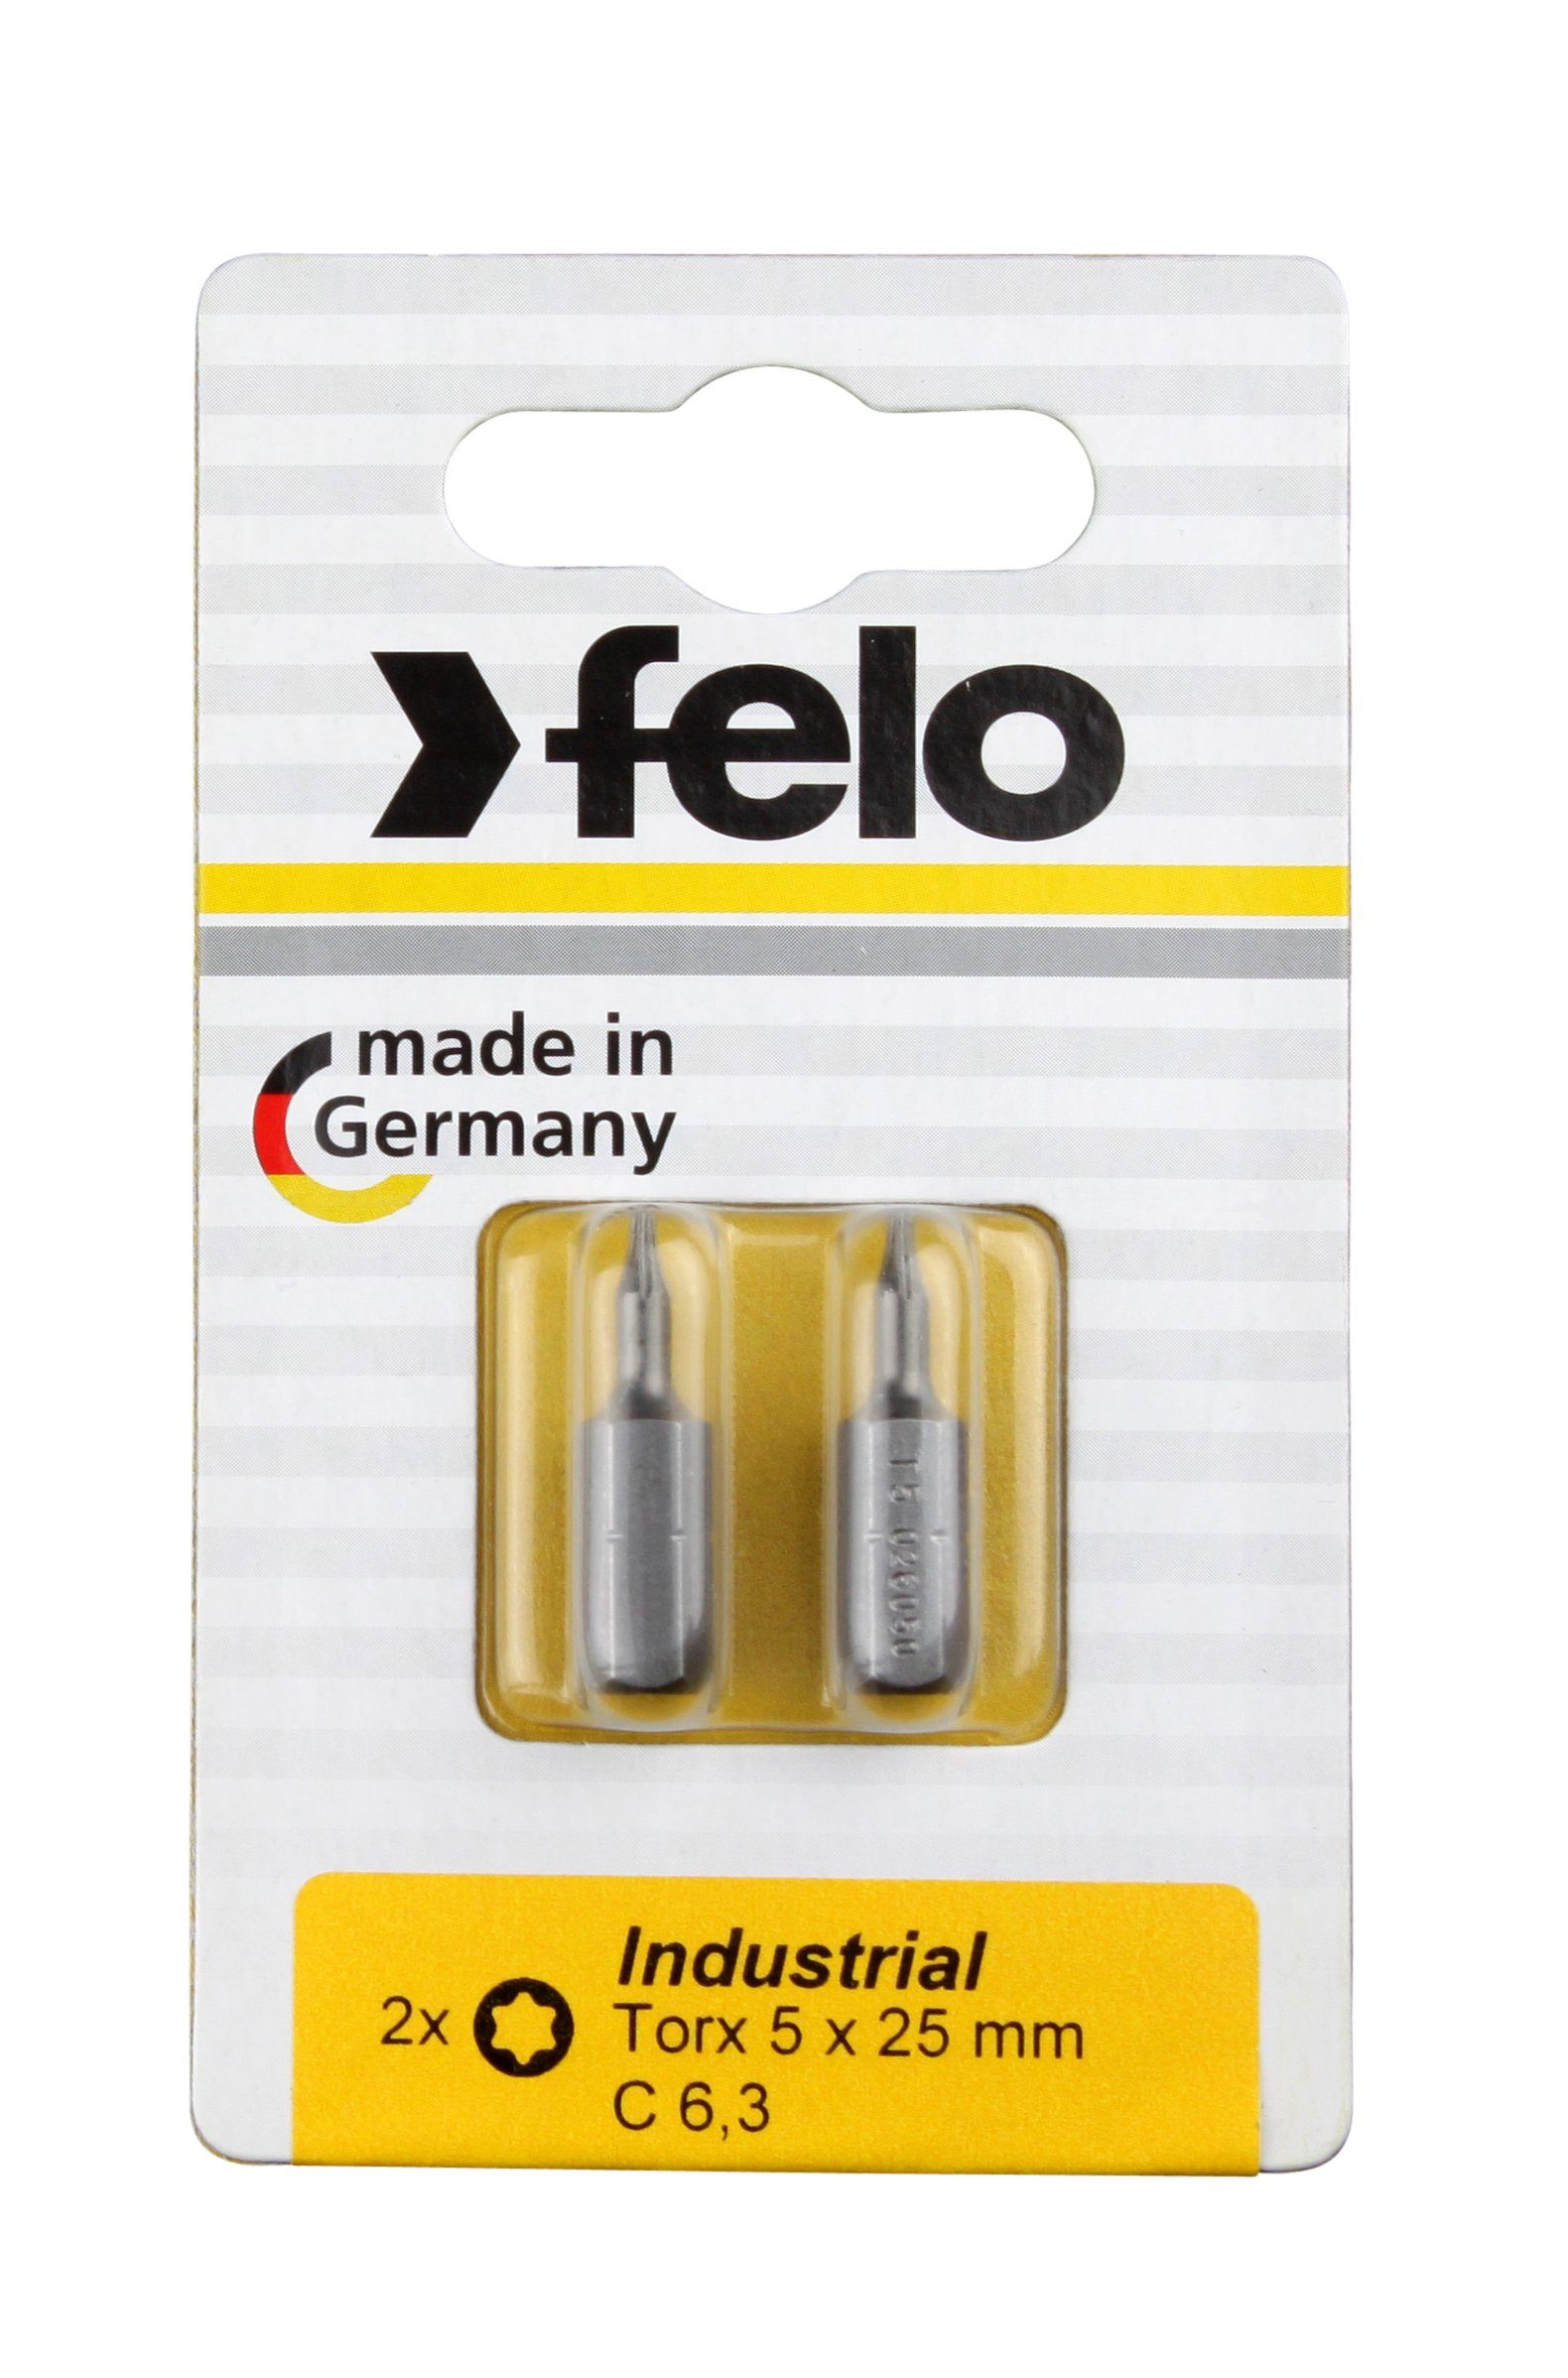 Felo 2 25mm, Bit, auf 2x Industrie x 6,3 6 Tx C Stk Felo Torx-Bit Karte